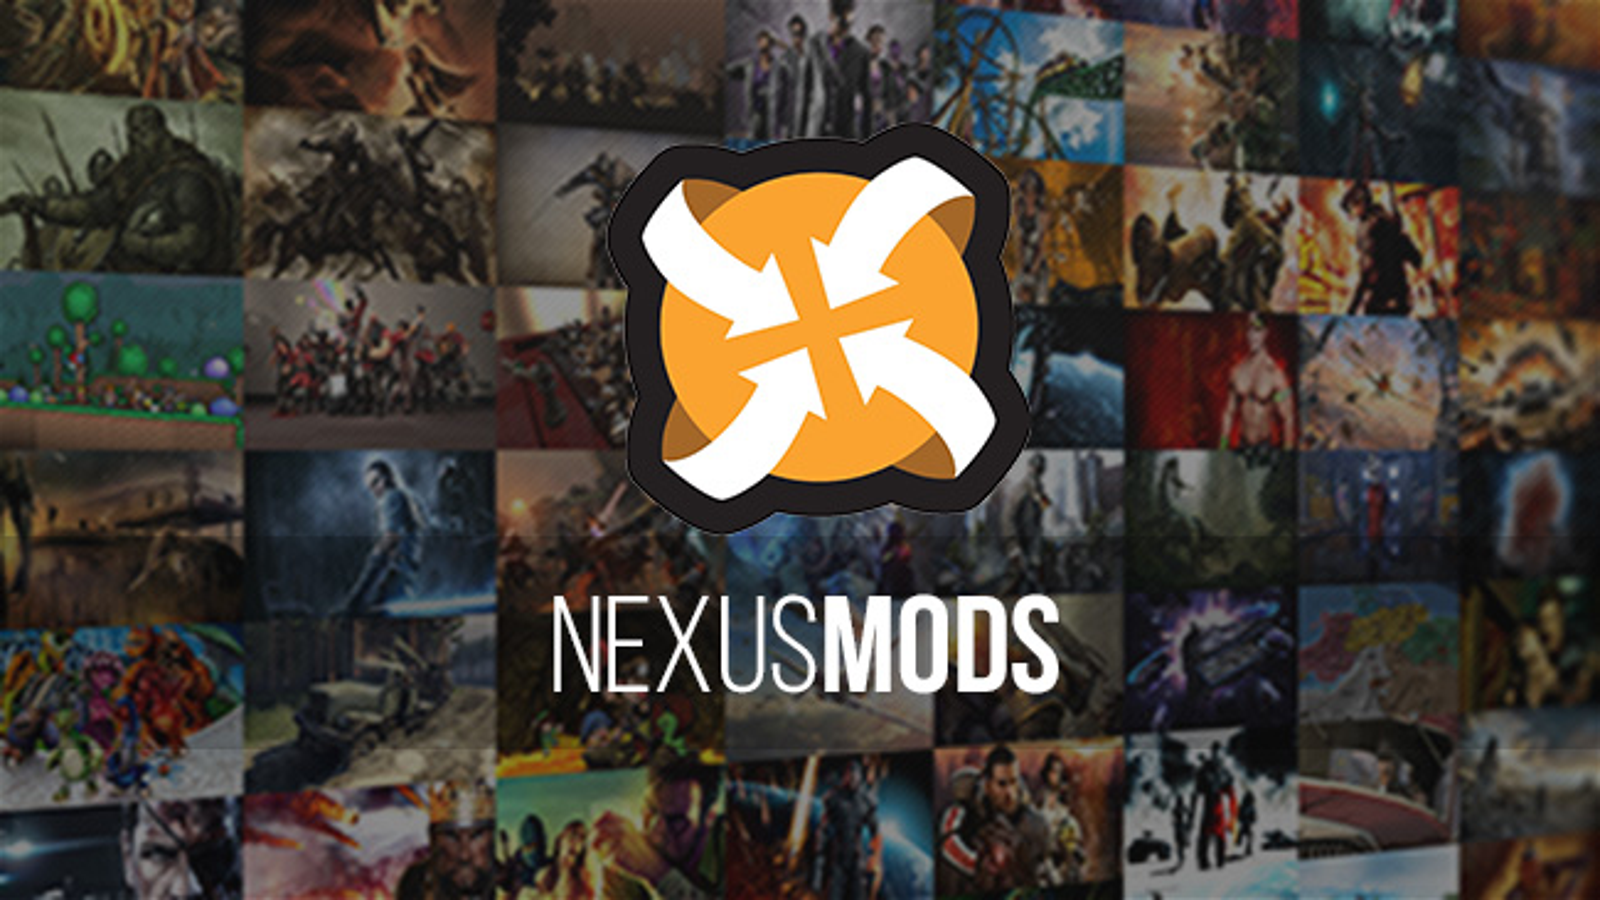 Nexus Mods Bans Political Content Ahead Of November US Election